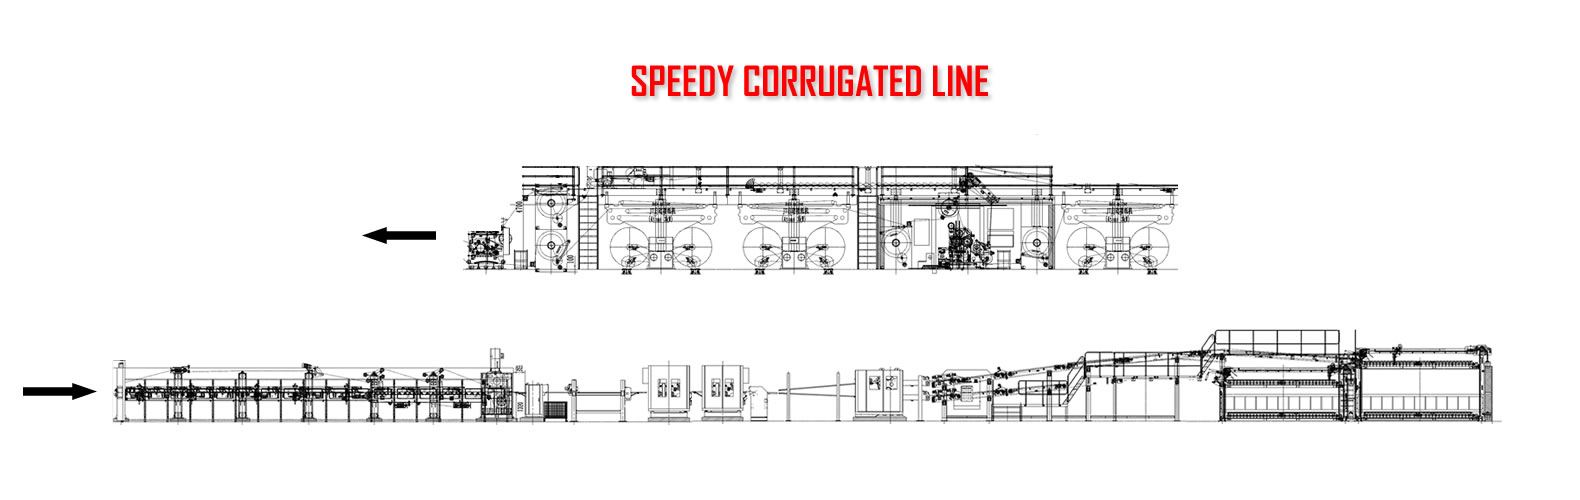 Speedy corrugated line with full option design